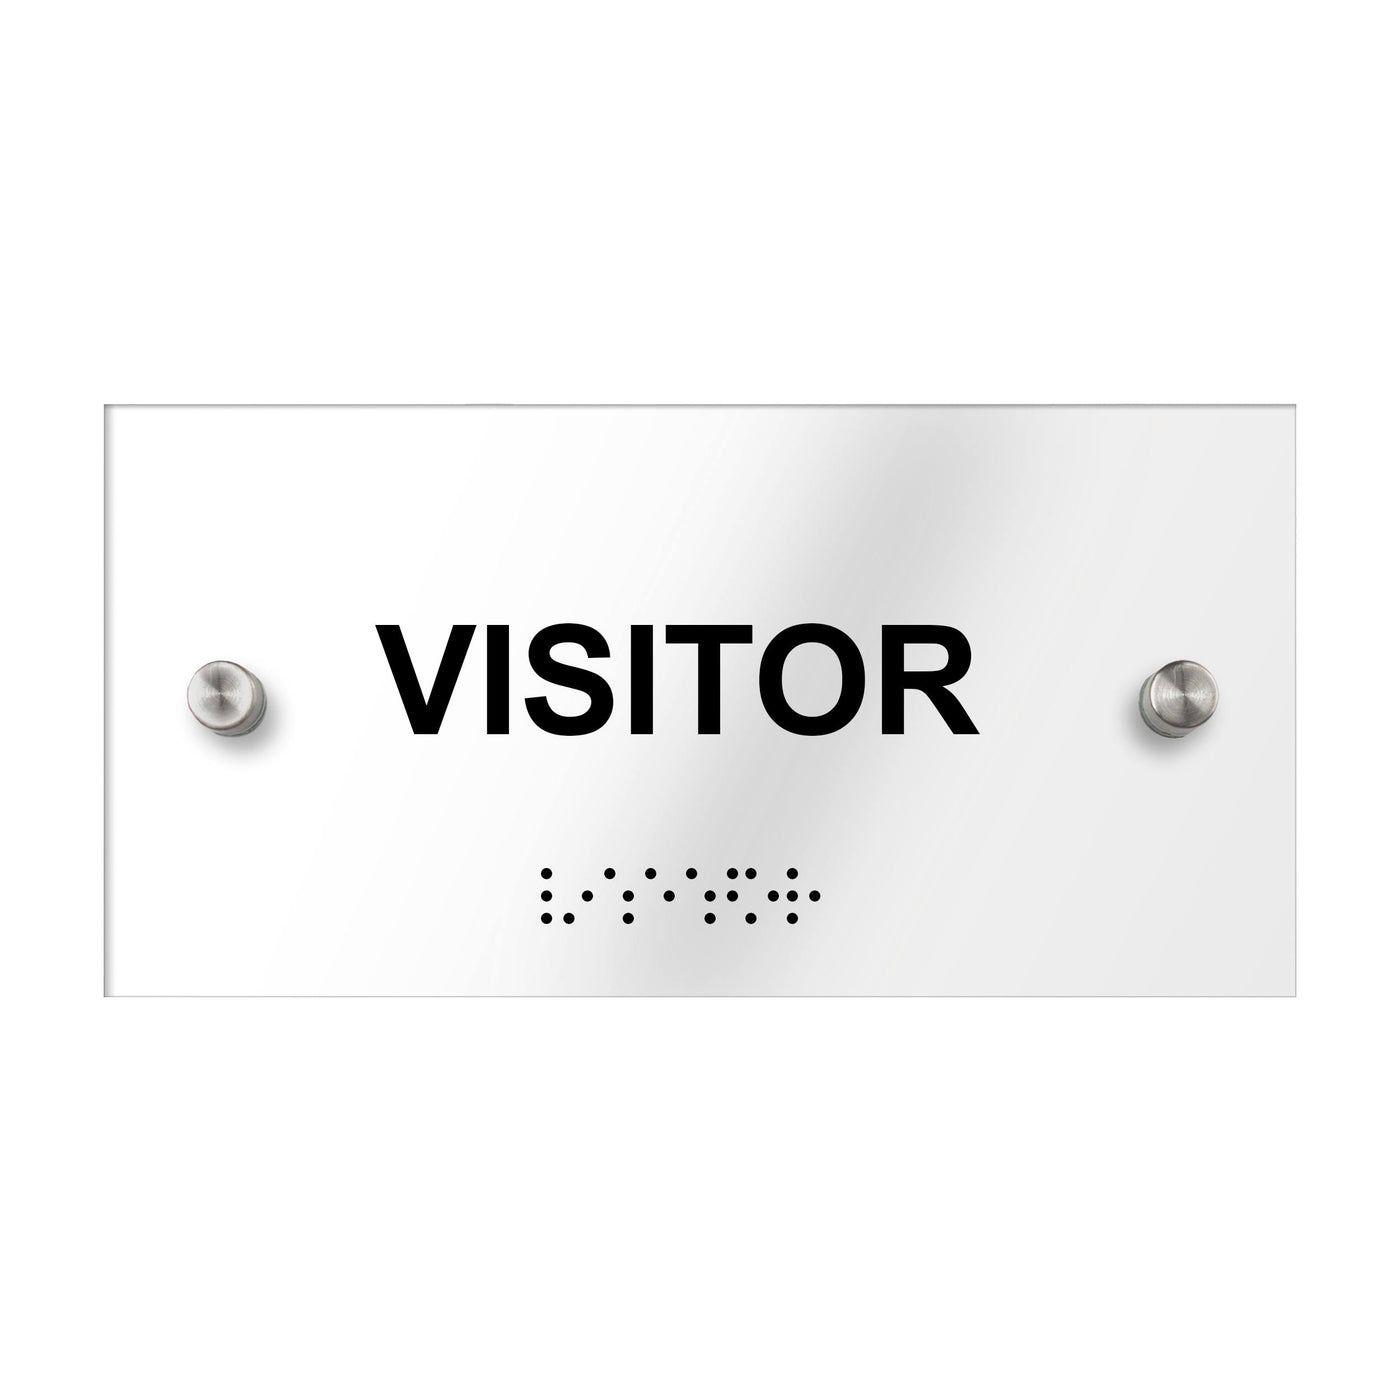 Door Signs - Visitor Sign "Classic" Design